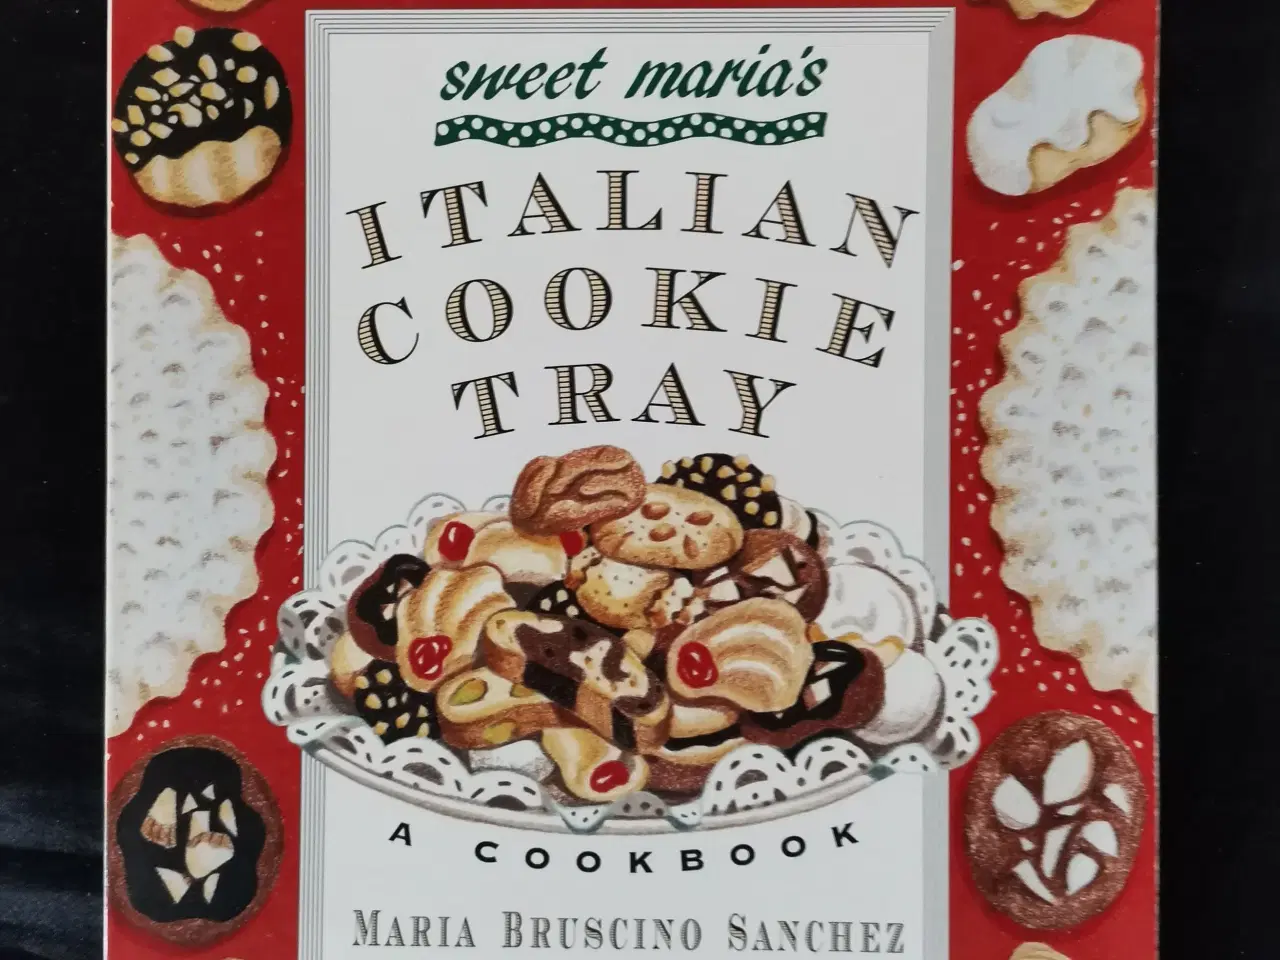 Billede 1 - Sweet Maria's Italian Cookie Tray, Maria Bruscino